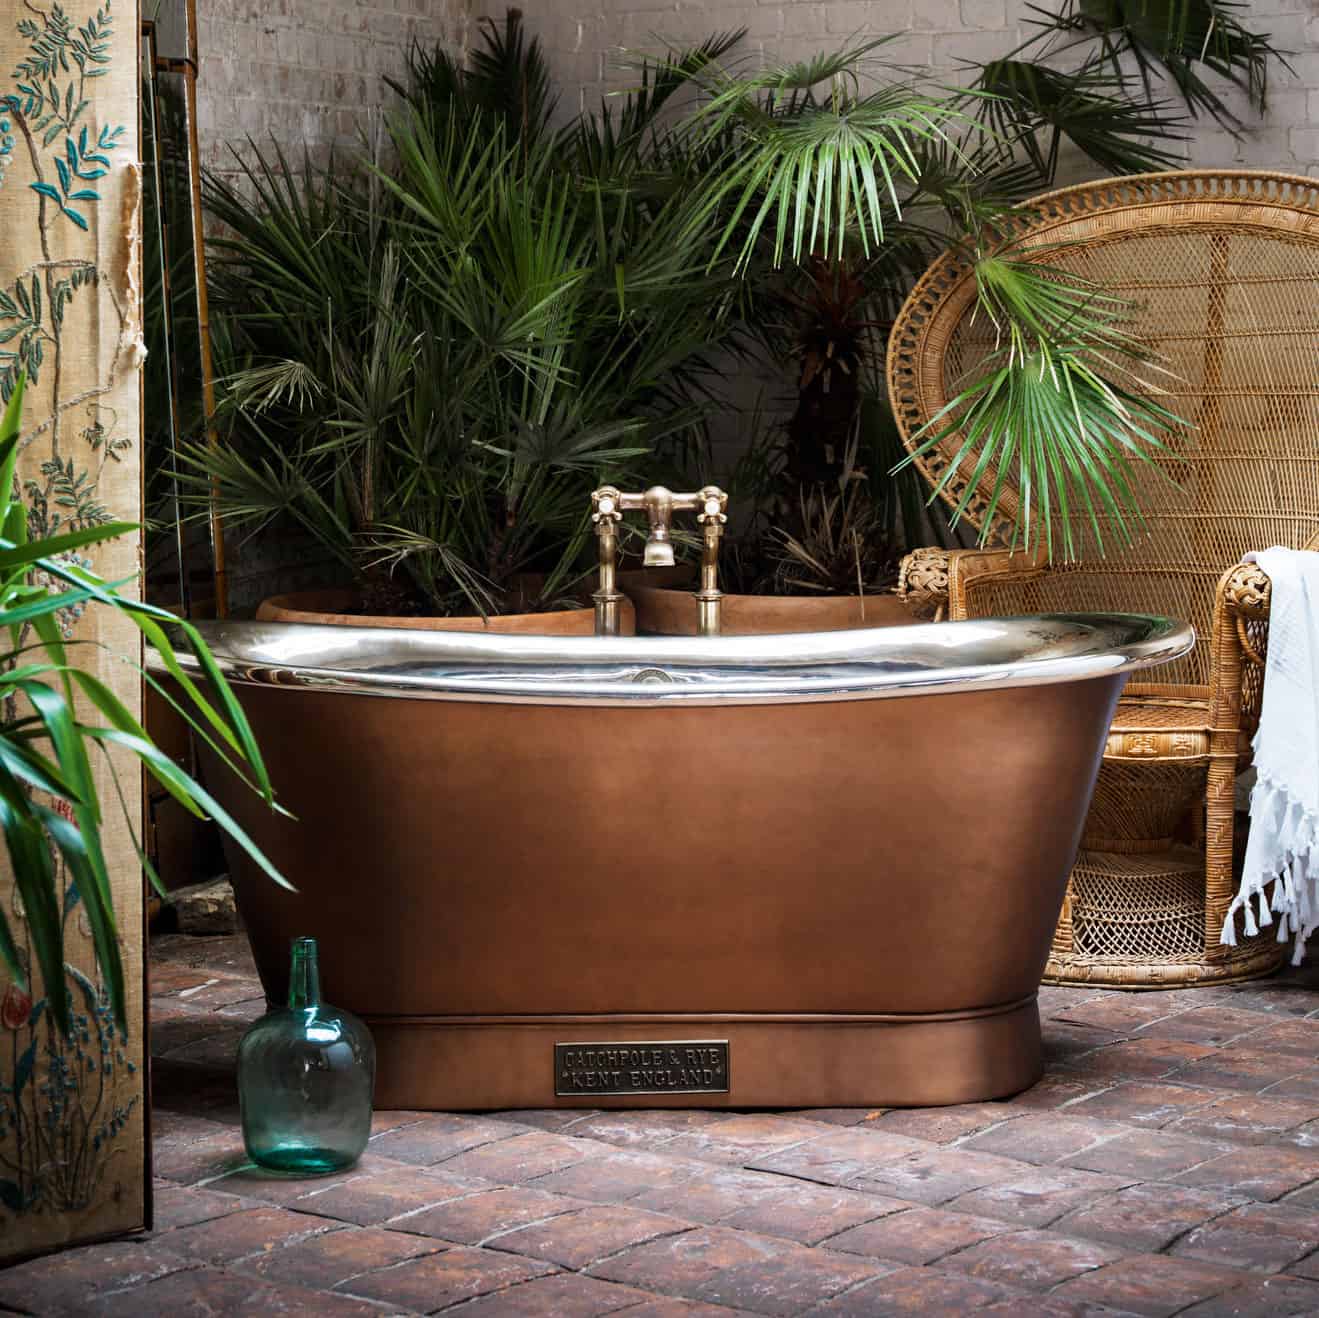 Luxury Bath Taps  Made in Kent - Catchpole & Rye